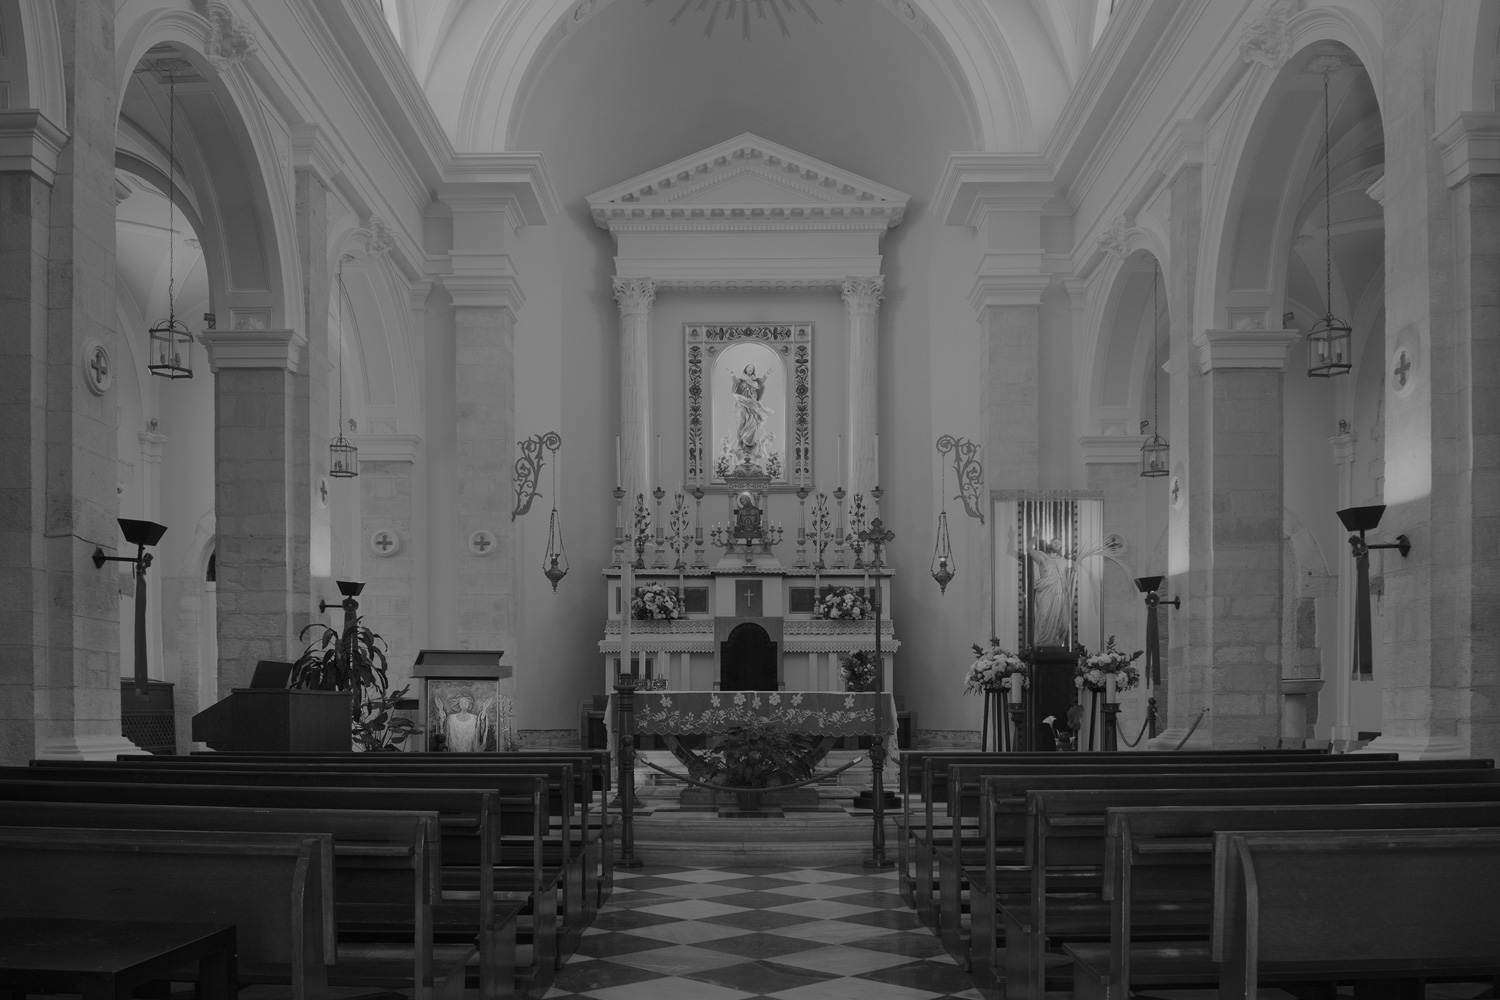 inside the catholic church